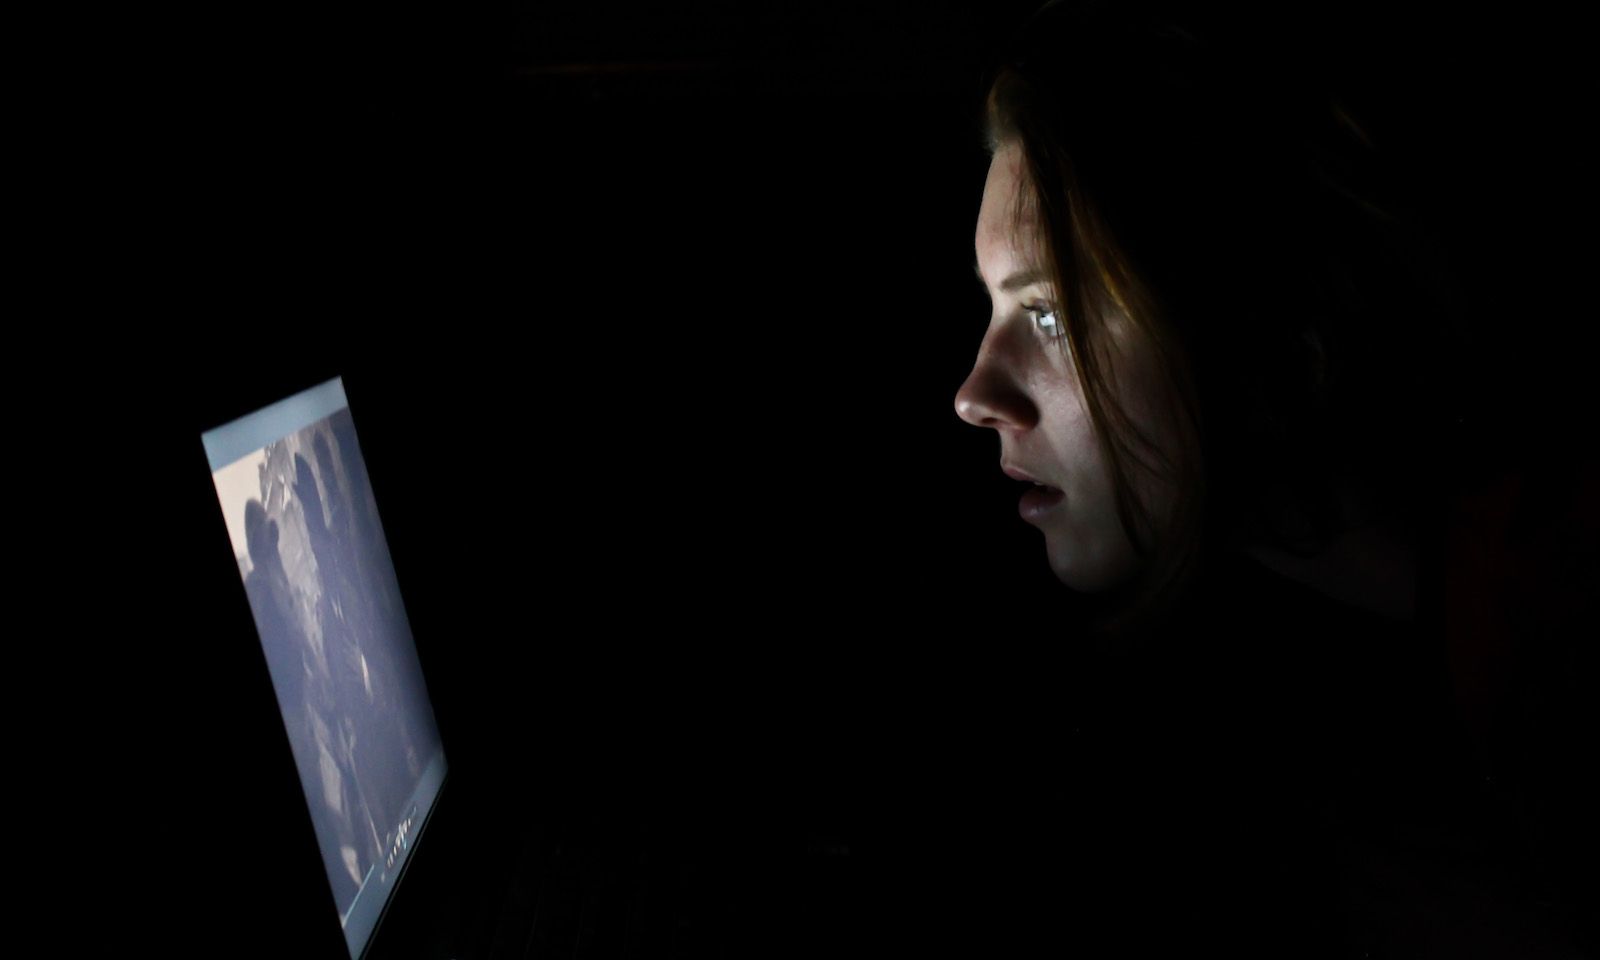 Scam Alert: Emails Claim to Know Your Porn Habits, Demand Cash